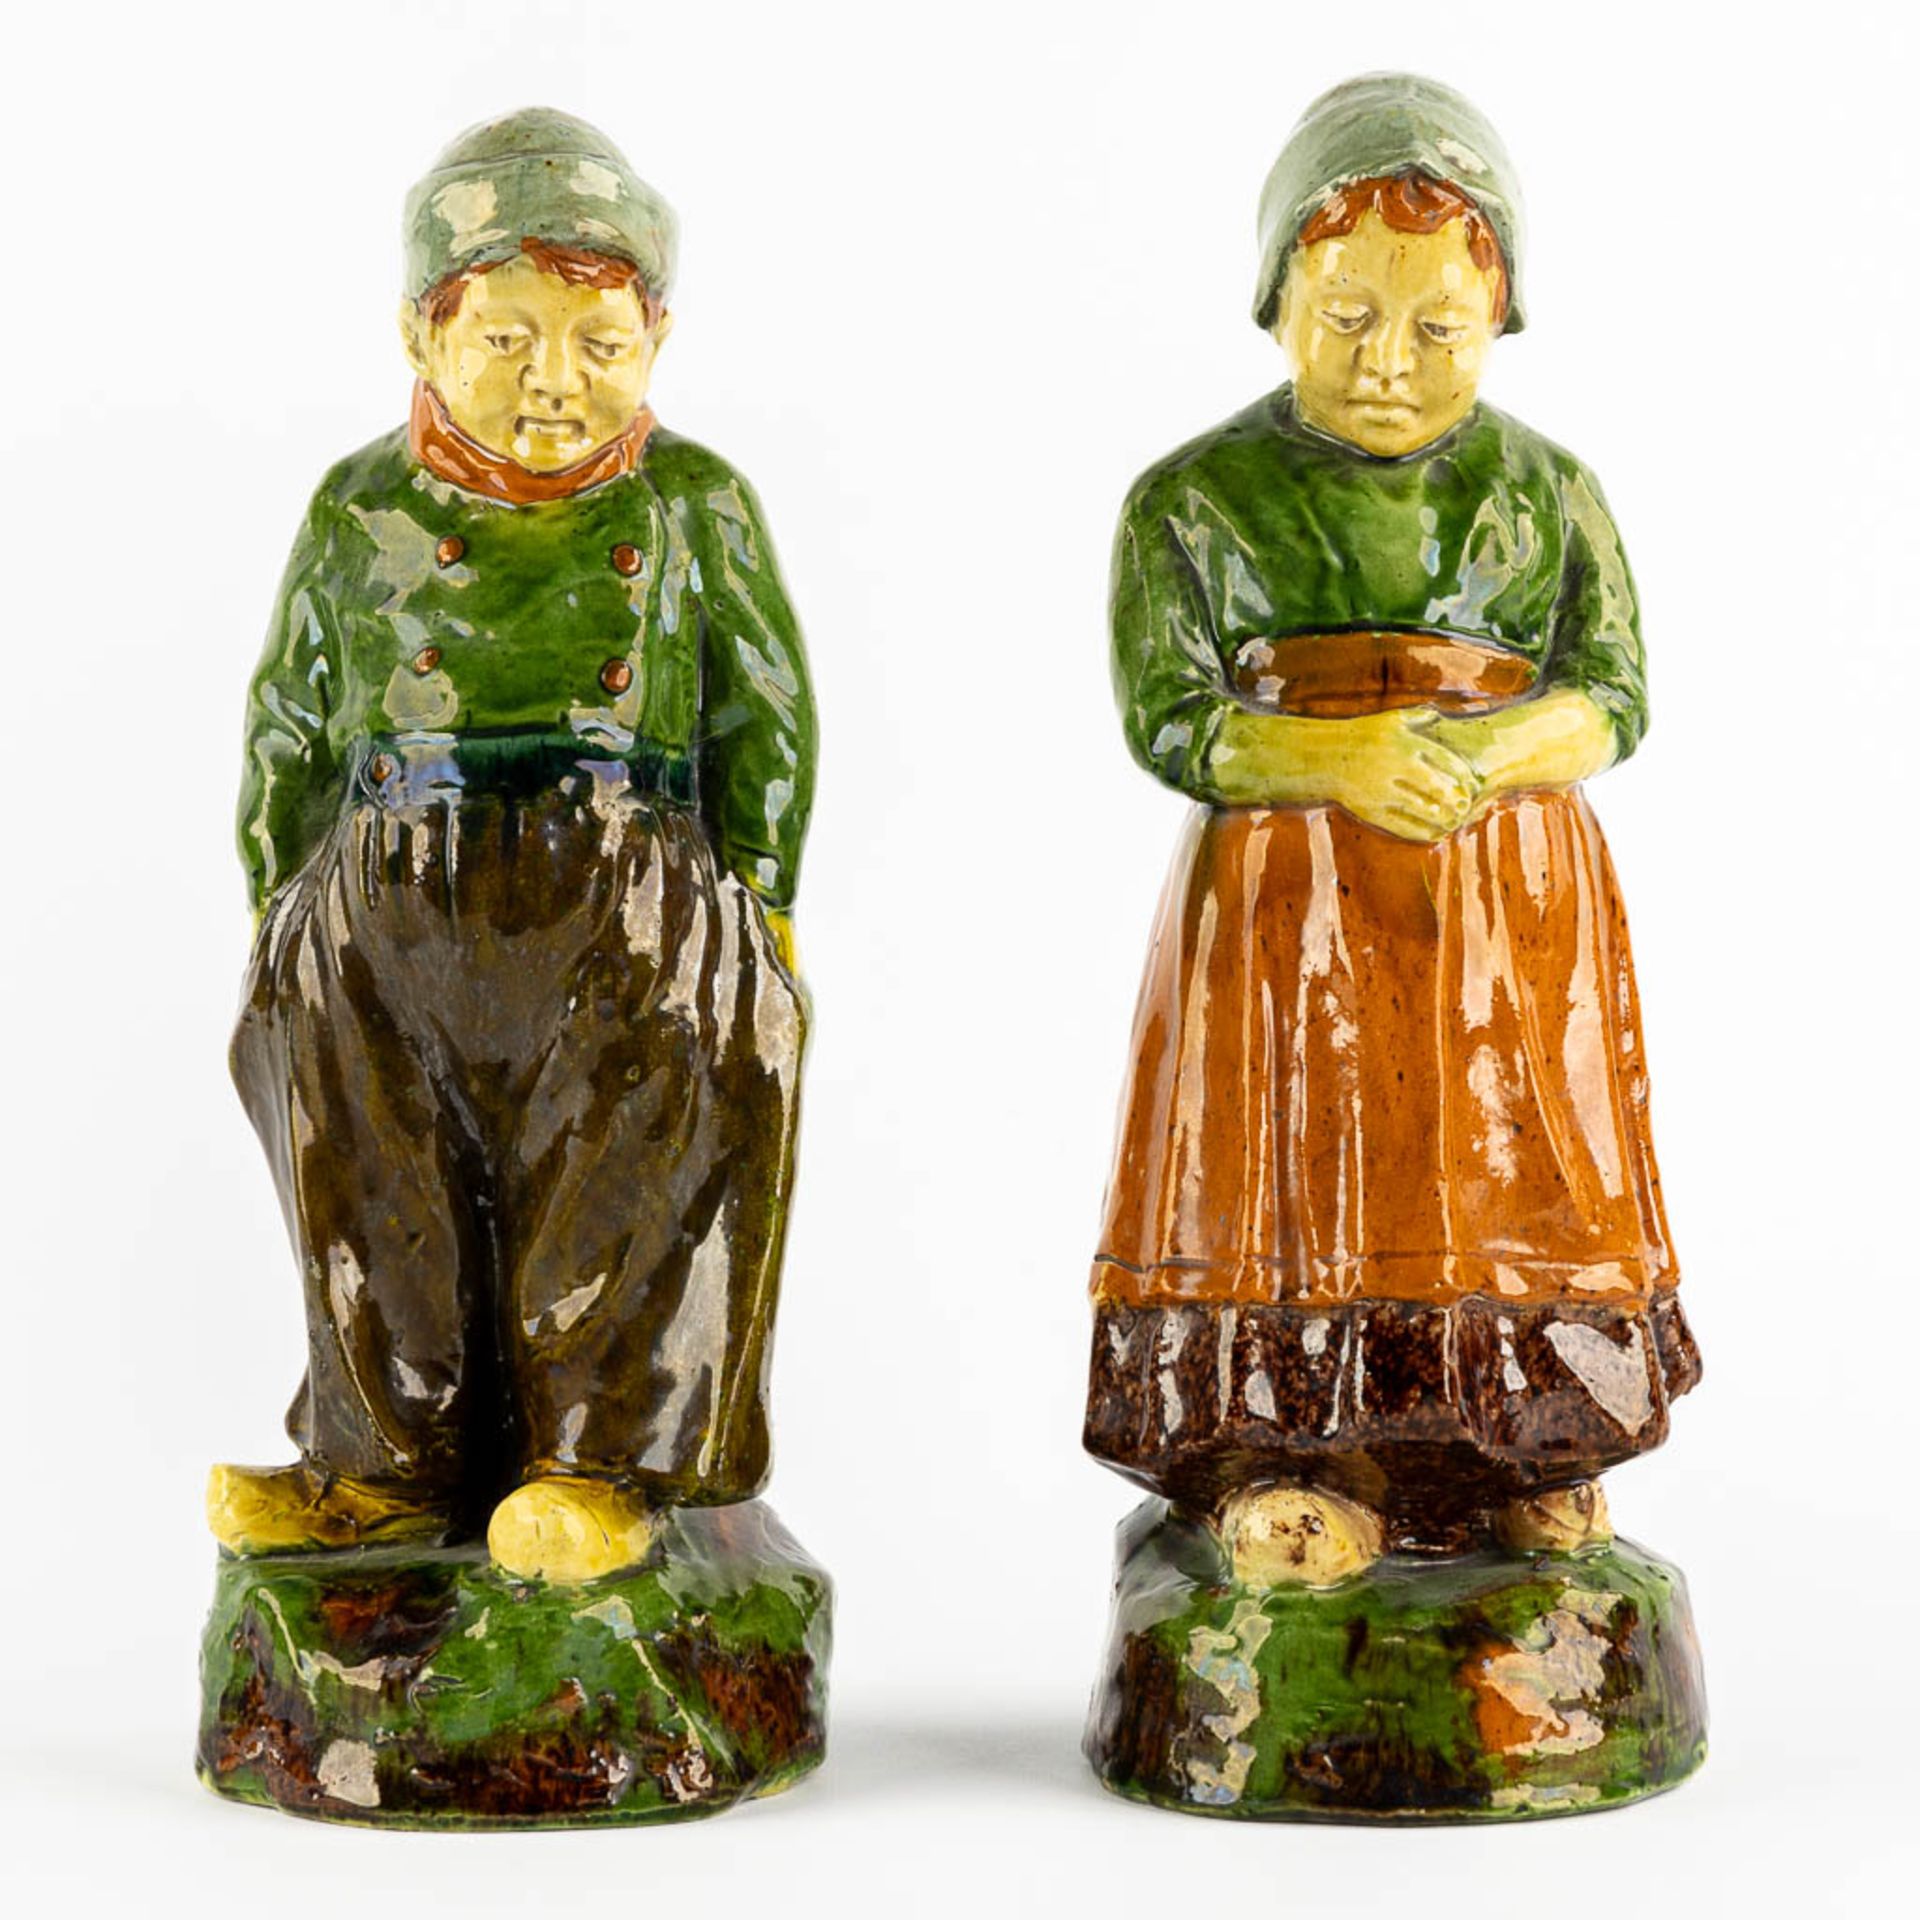 Figurine of a Man and Woman, Flemish Earthenware, possibly Caessens. Circa 1900. (H:32 x D:12 cm) - Bild 3 aus 9